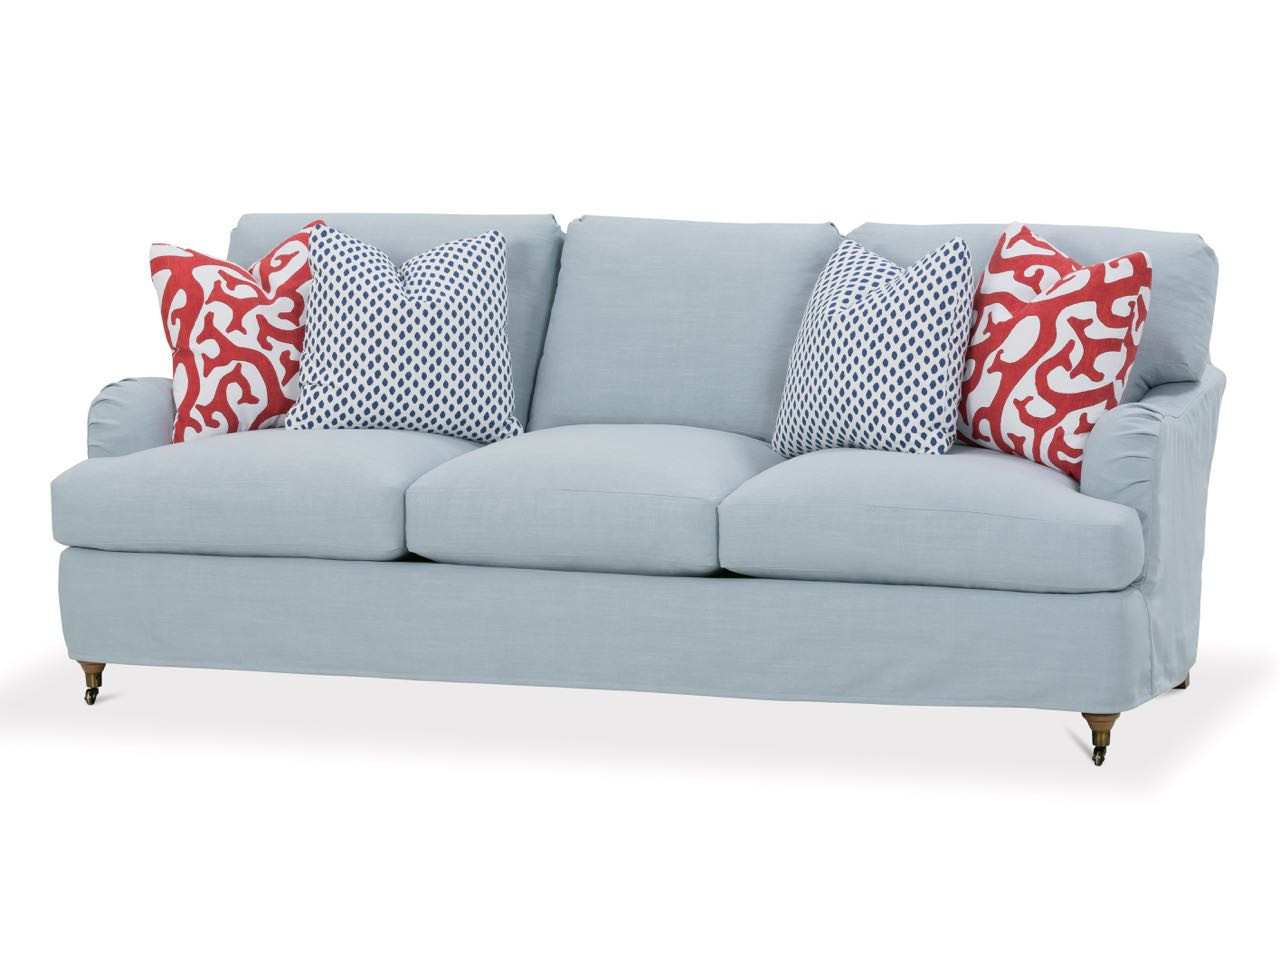 Brooke 2 Cushion Sofa